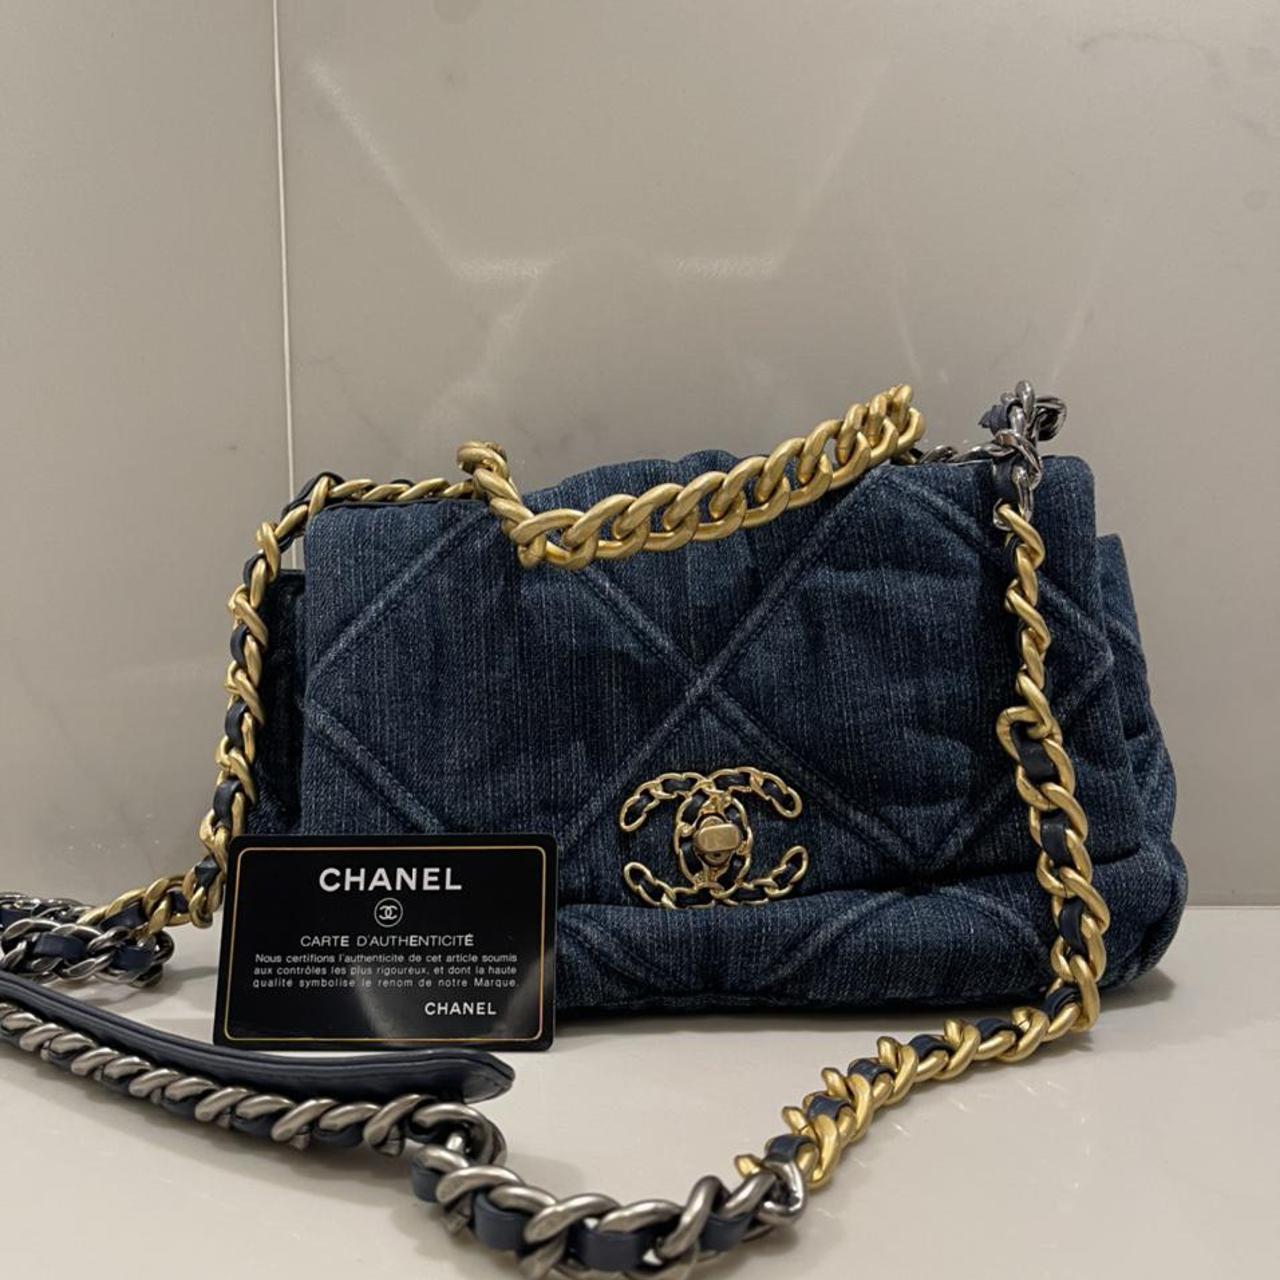 Luxeluxurylabels on Instagram: Chanel denim quilted mini bag in